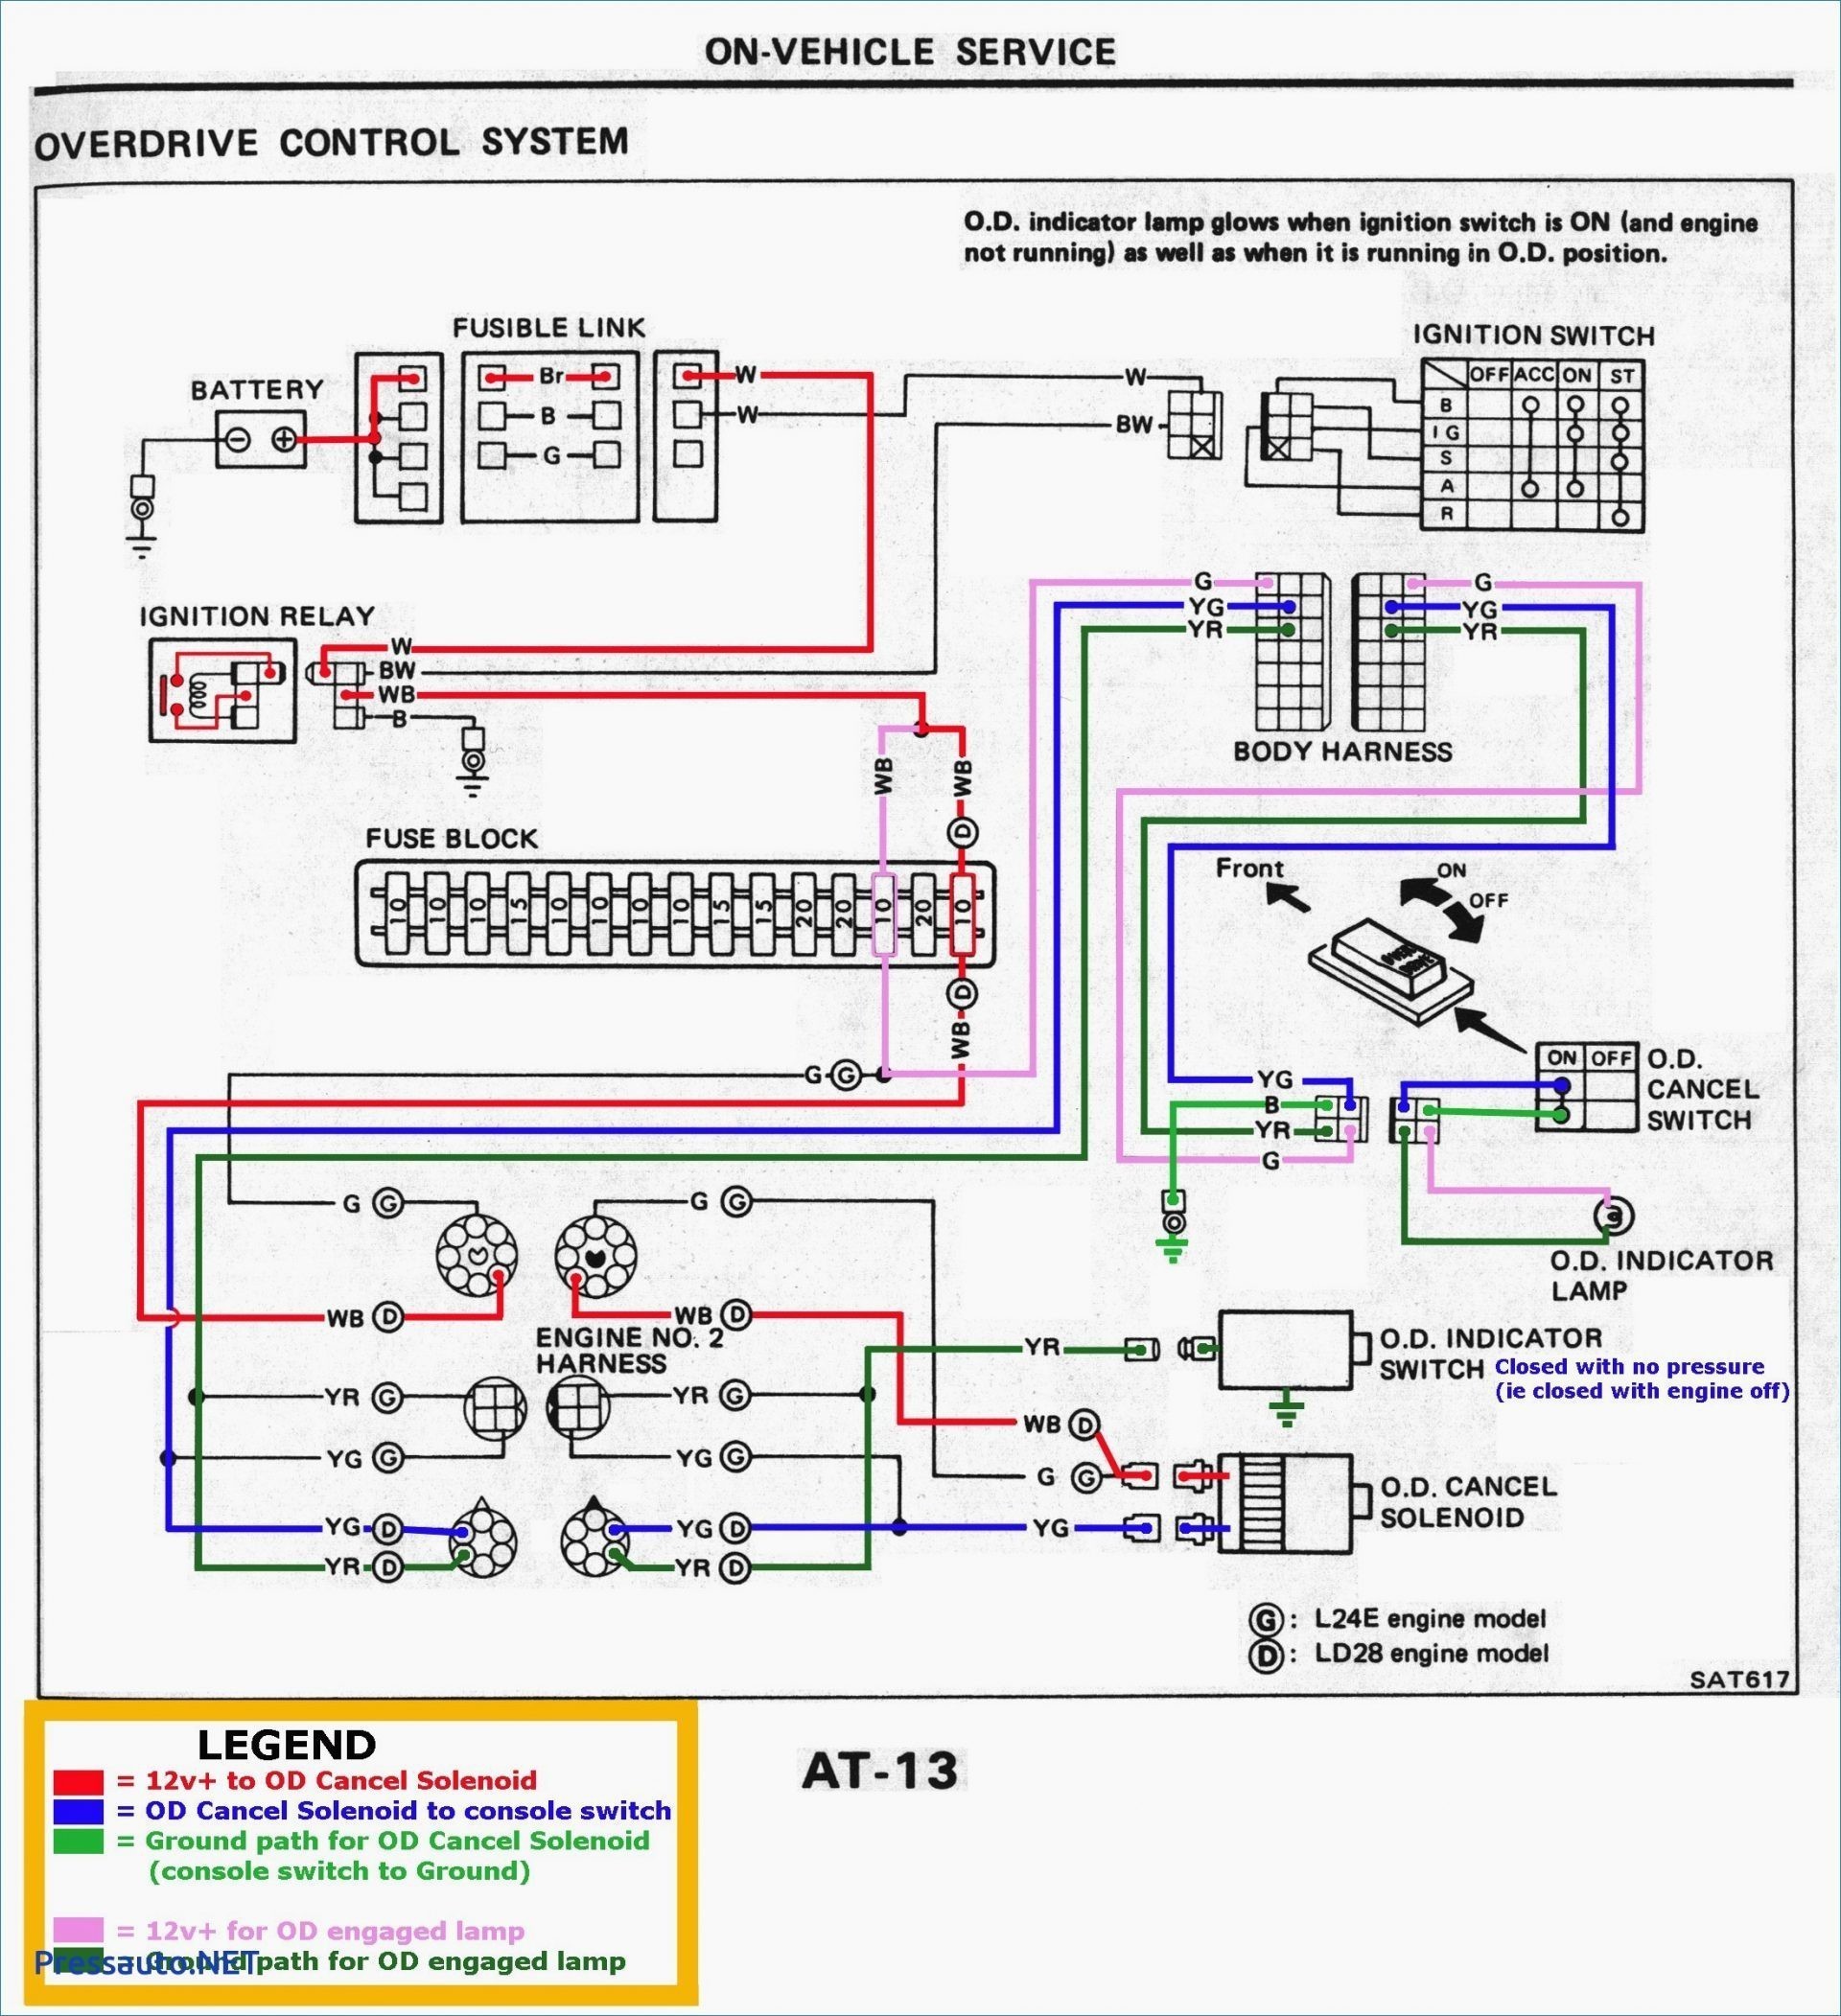 Klr 650 Wiring Diagram Audi A4 Central Locking Wiring Diagram Best Vw Golf 4 Central